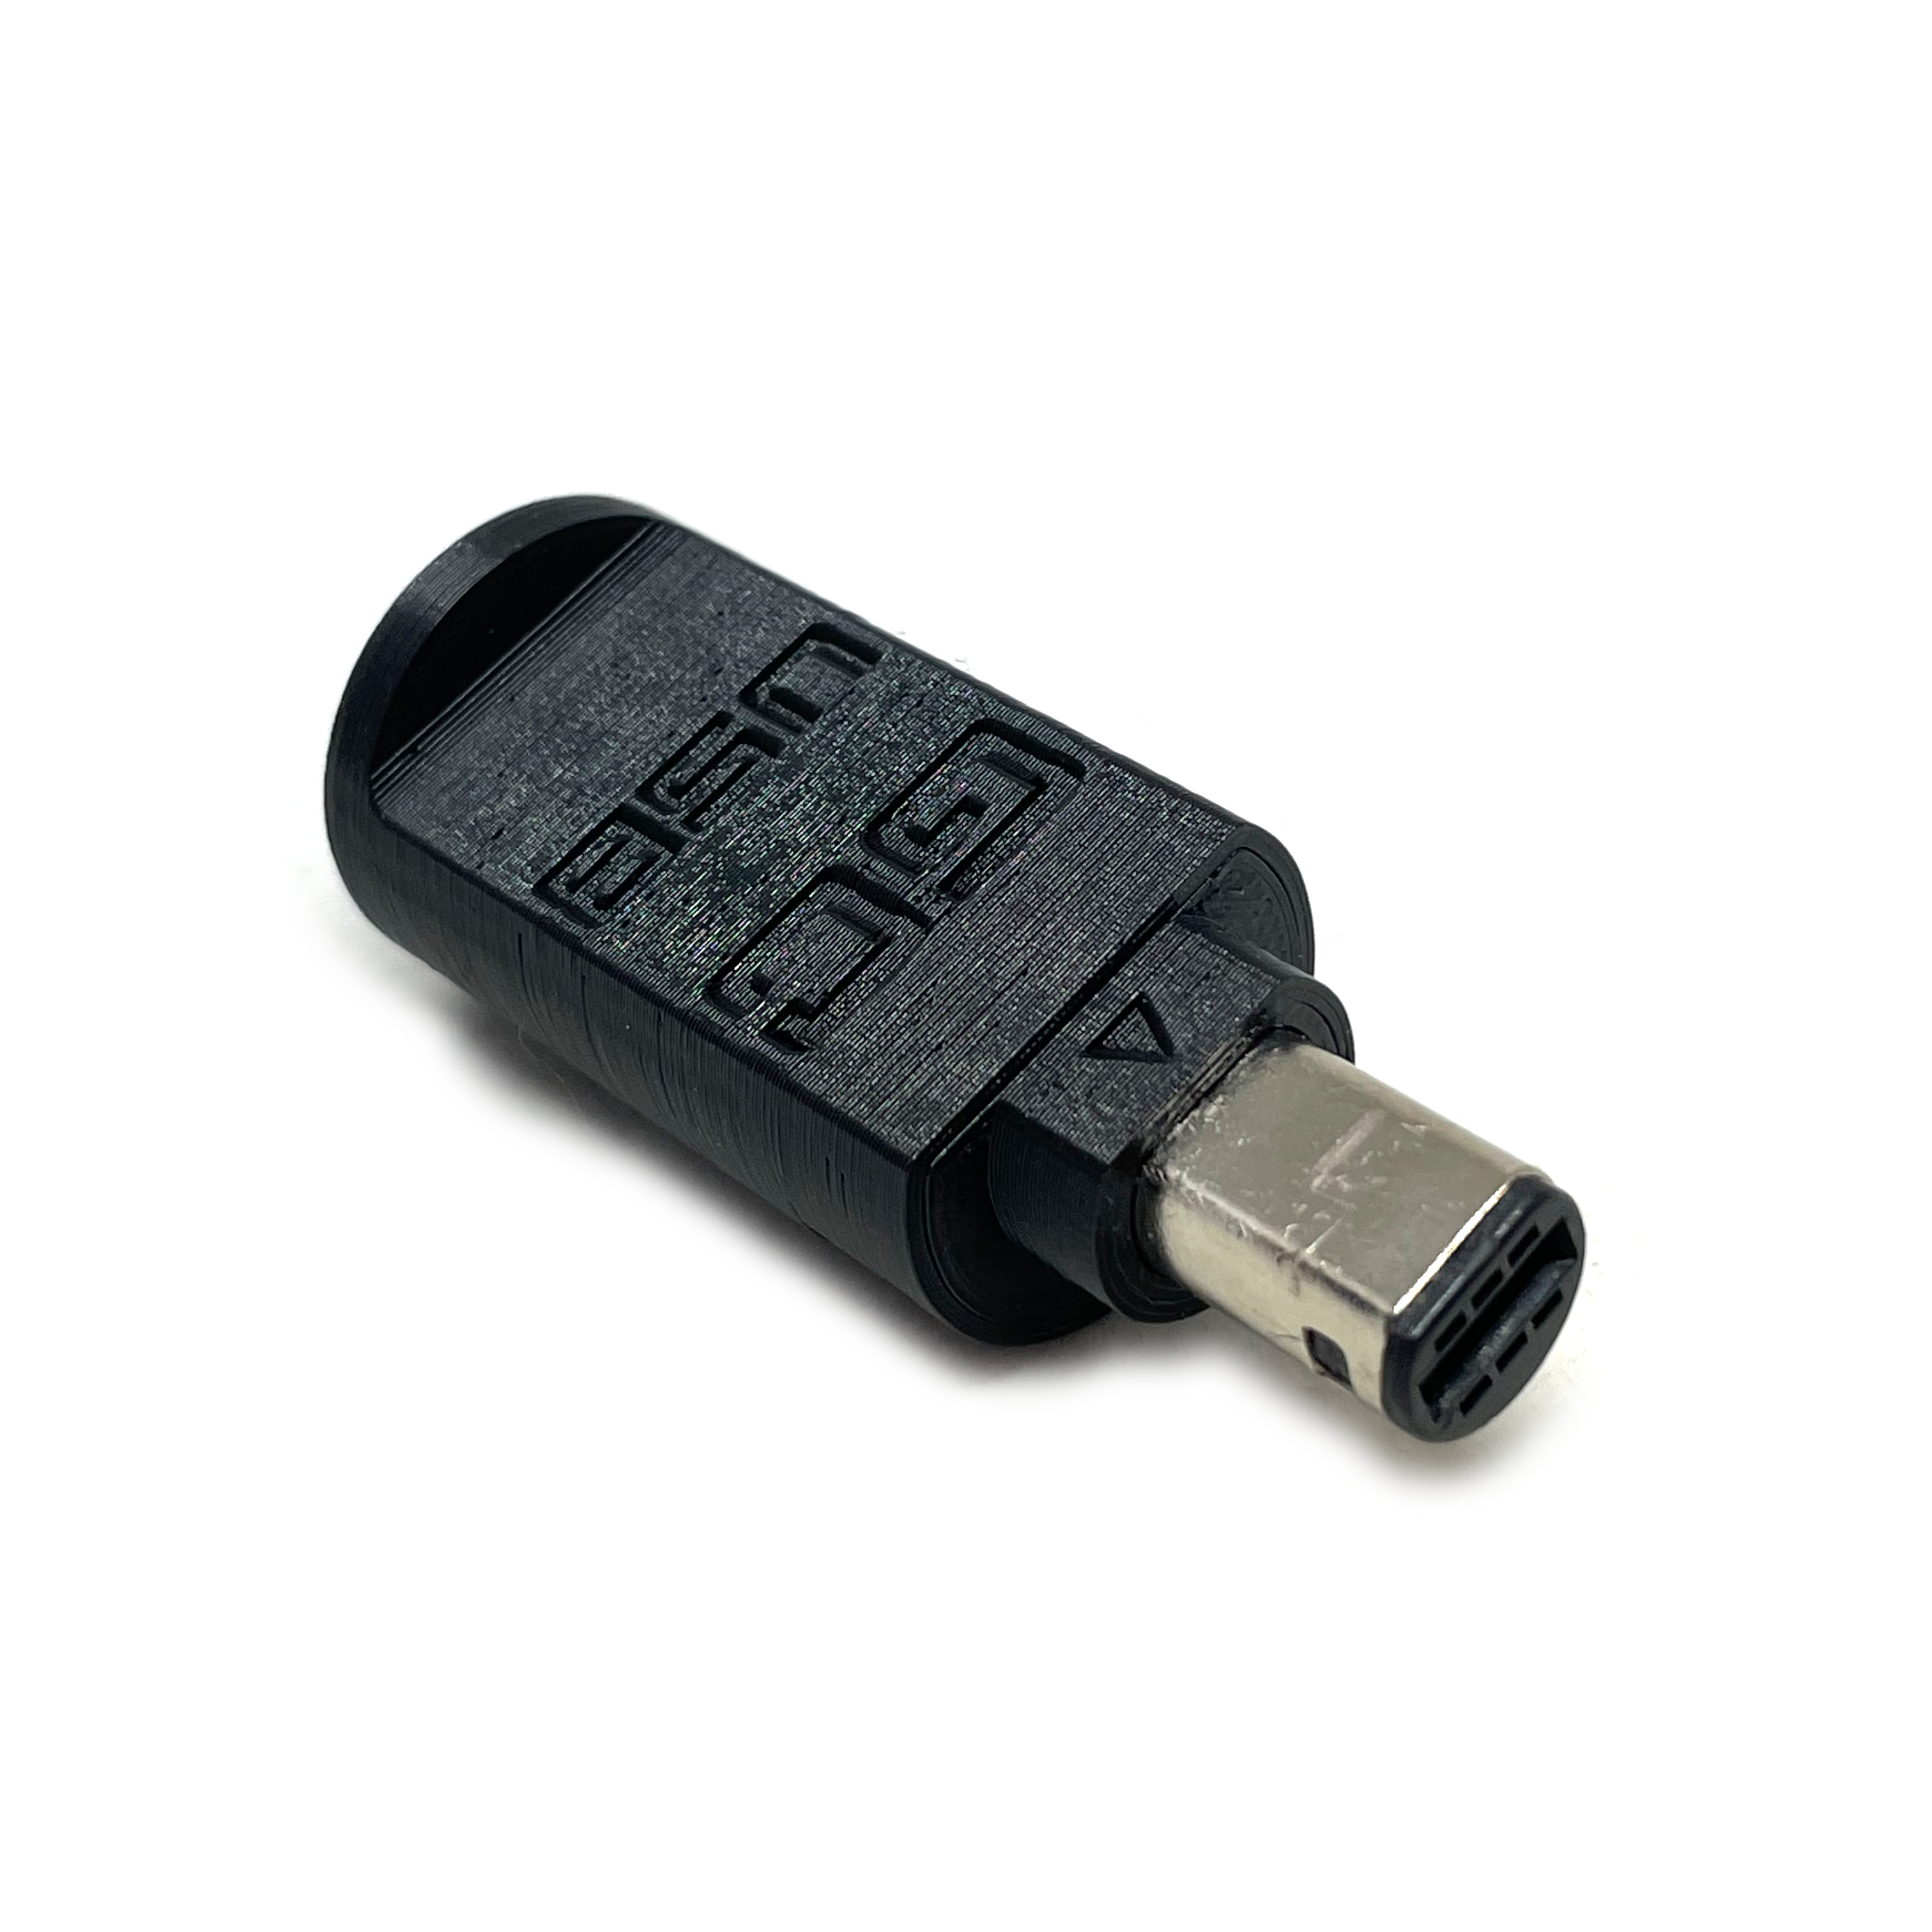 GC USB